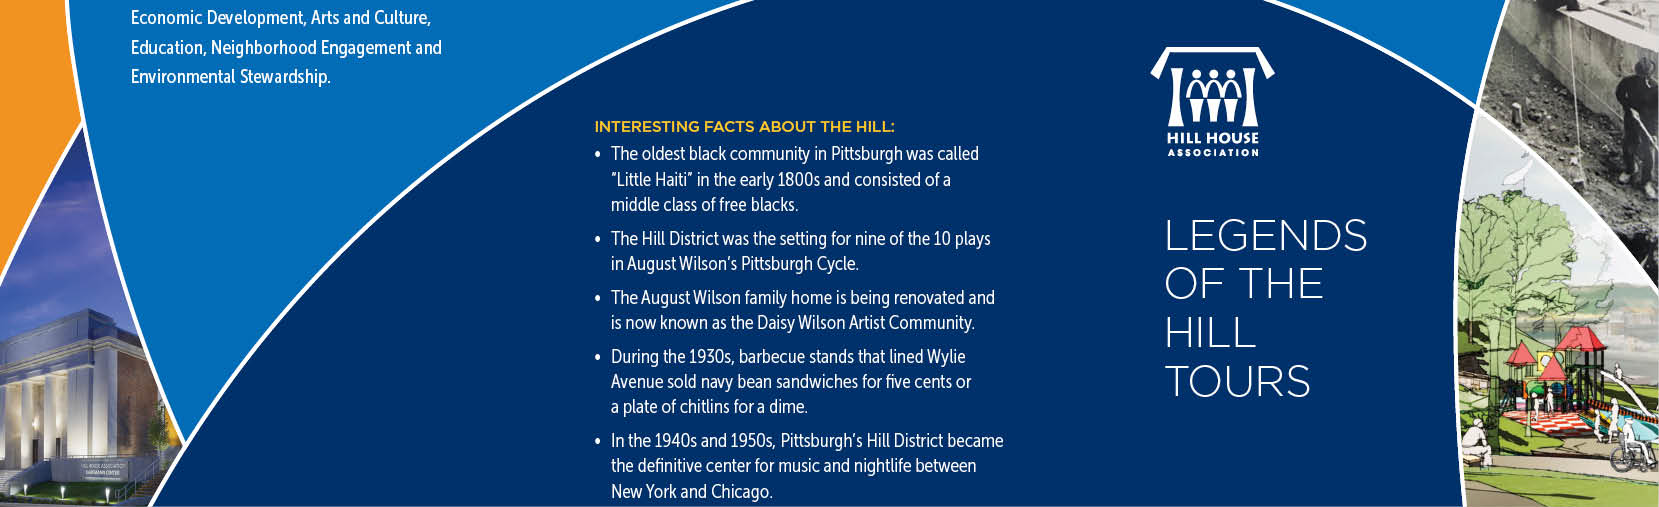 Hill House PR program pamphlet